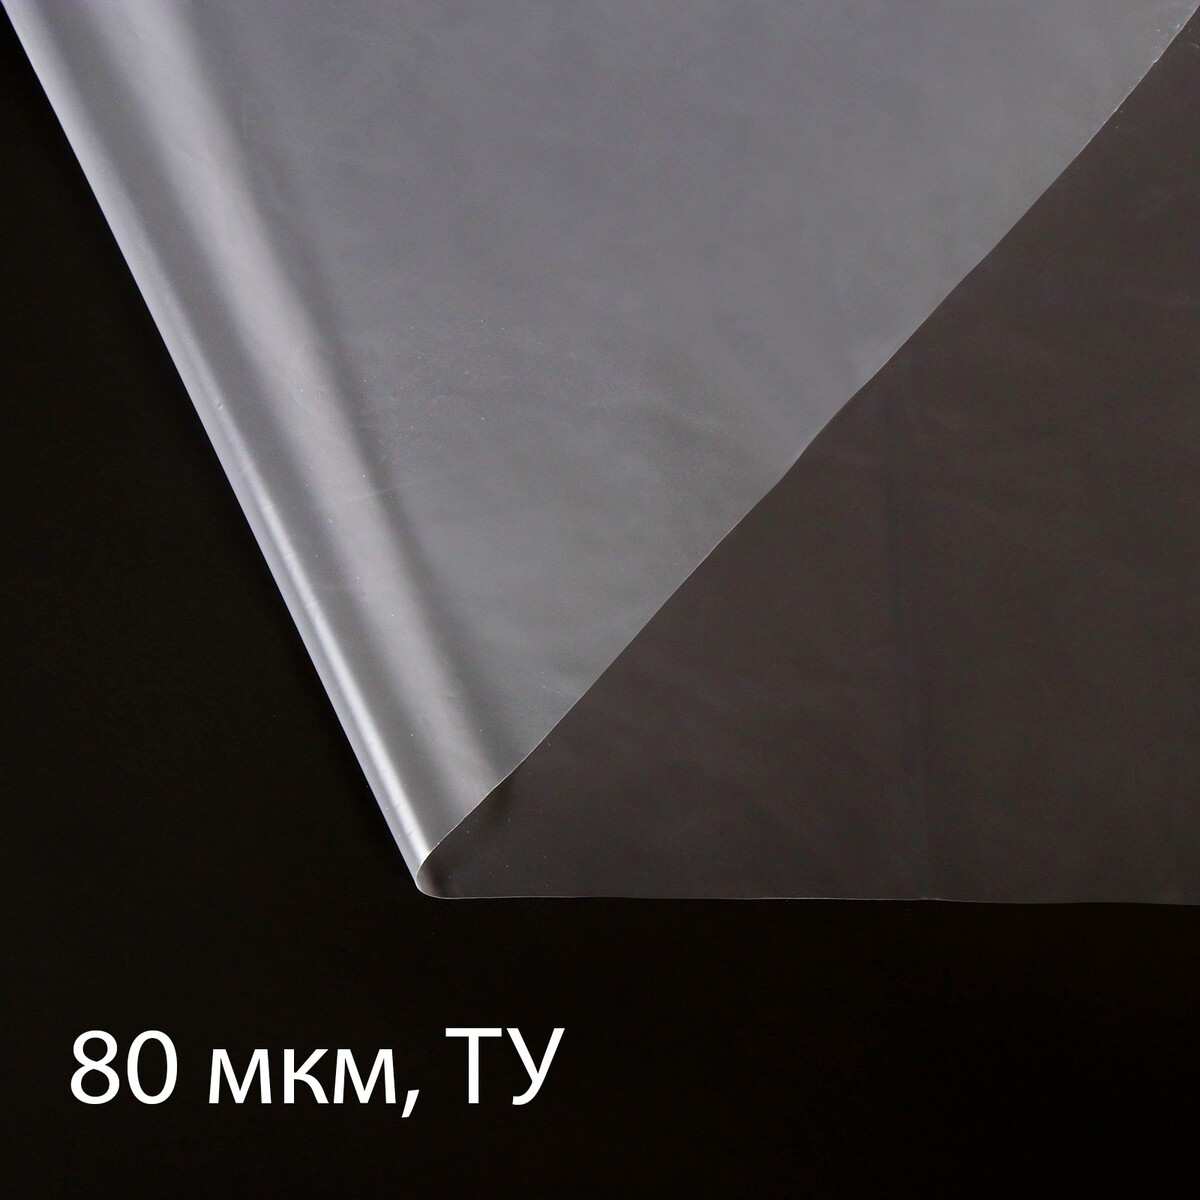 Пленка полиэтиленовая 80 мкм, прозрачная, длина 5 м, ширина 3 м, рукав (1.5 × 2 м), эконом 50%